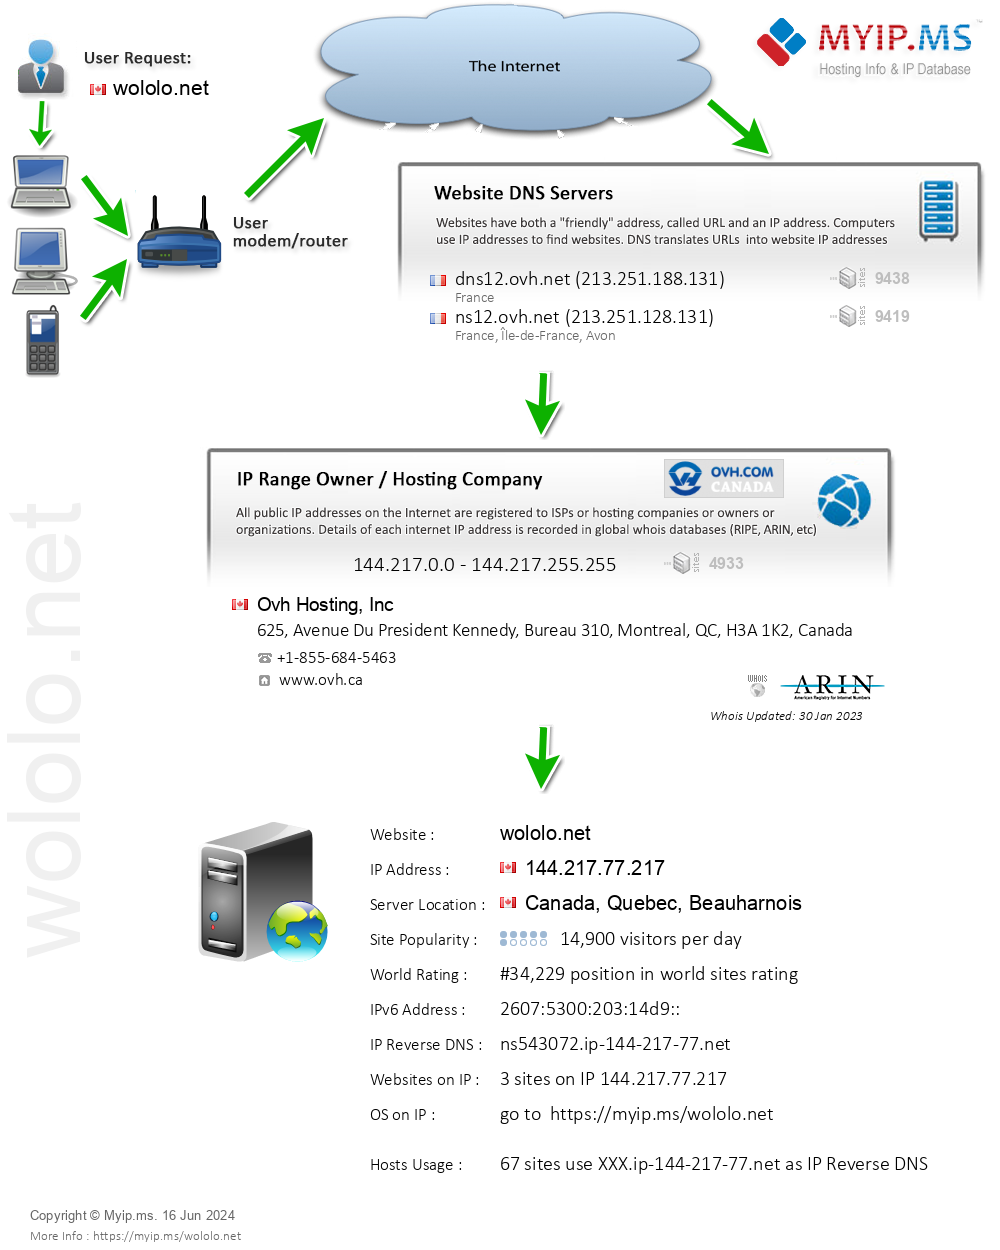 Wololo.net - Website Hosting Visual IP Diagram